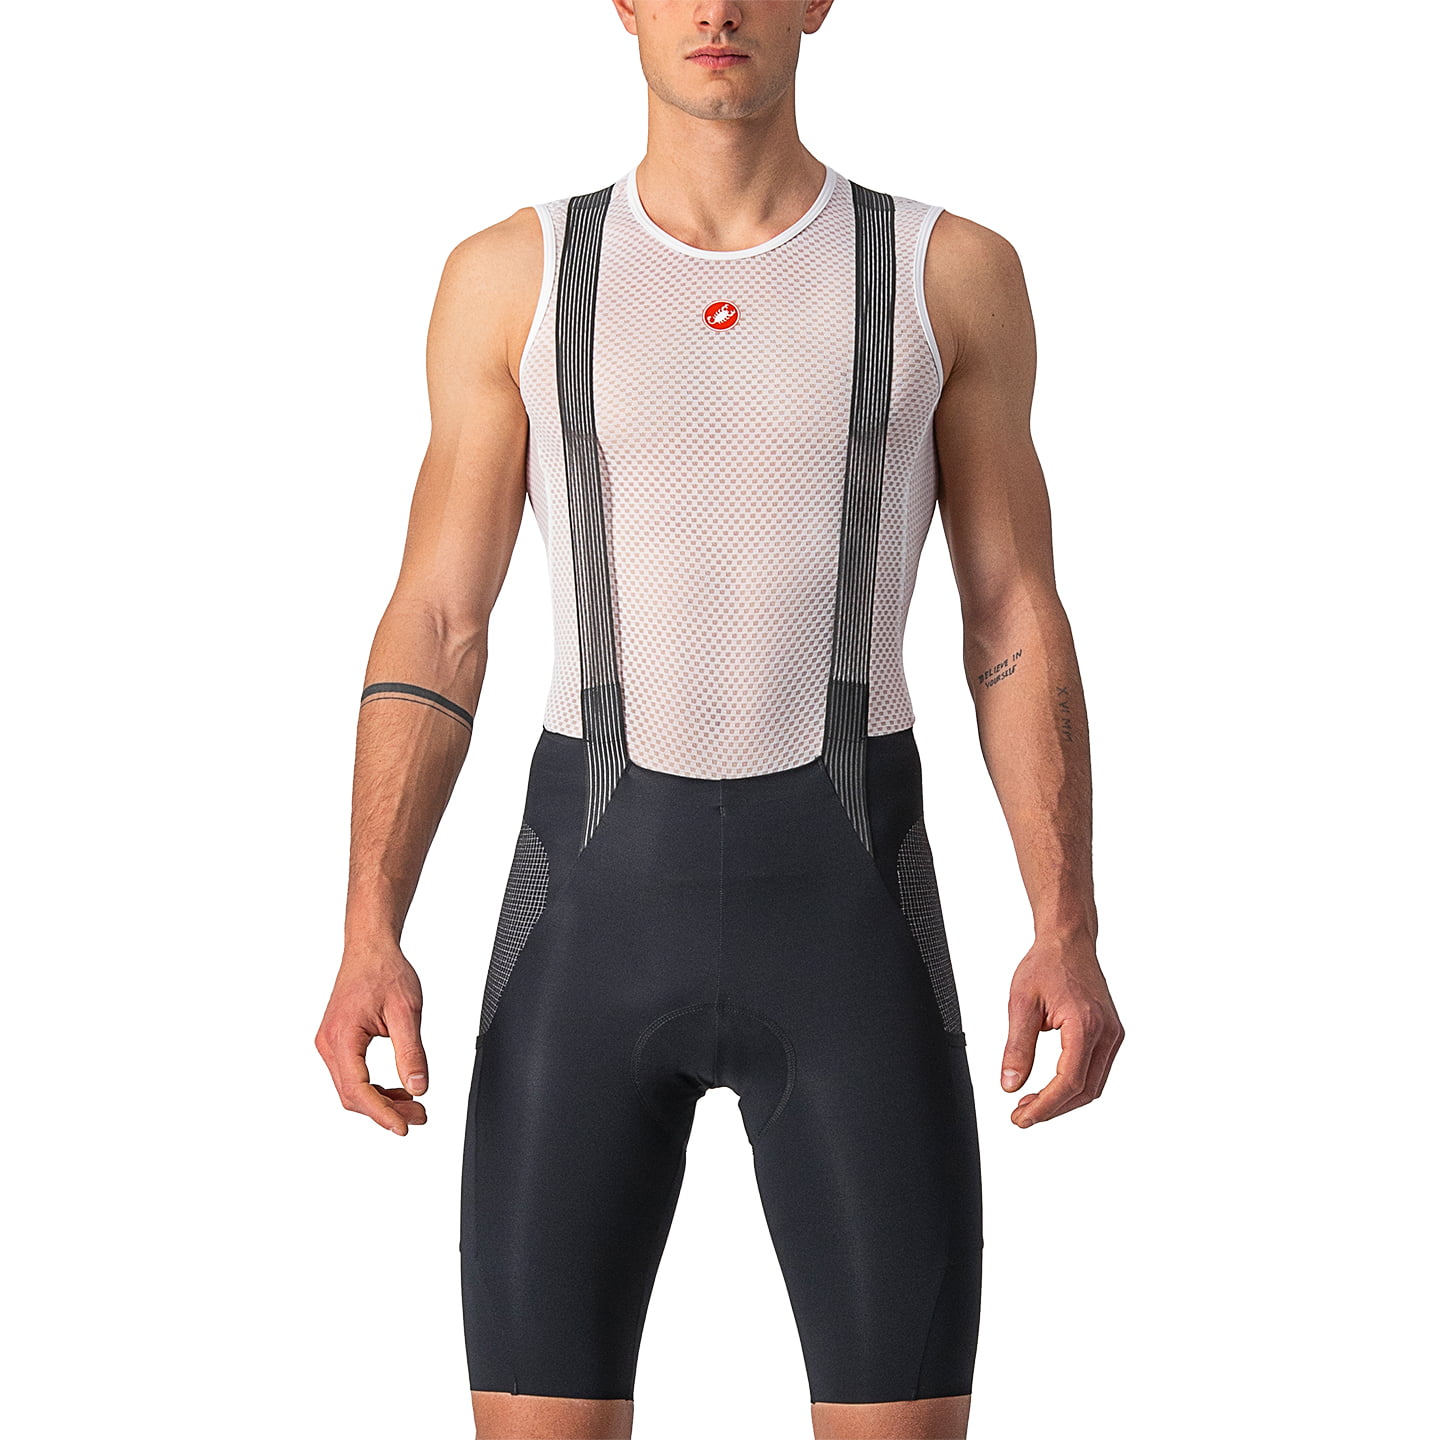 Free Unlimited Bib Shorts Bib Shorts, for men, size M, Cycle shorts, Cycling clothing